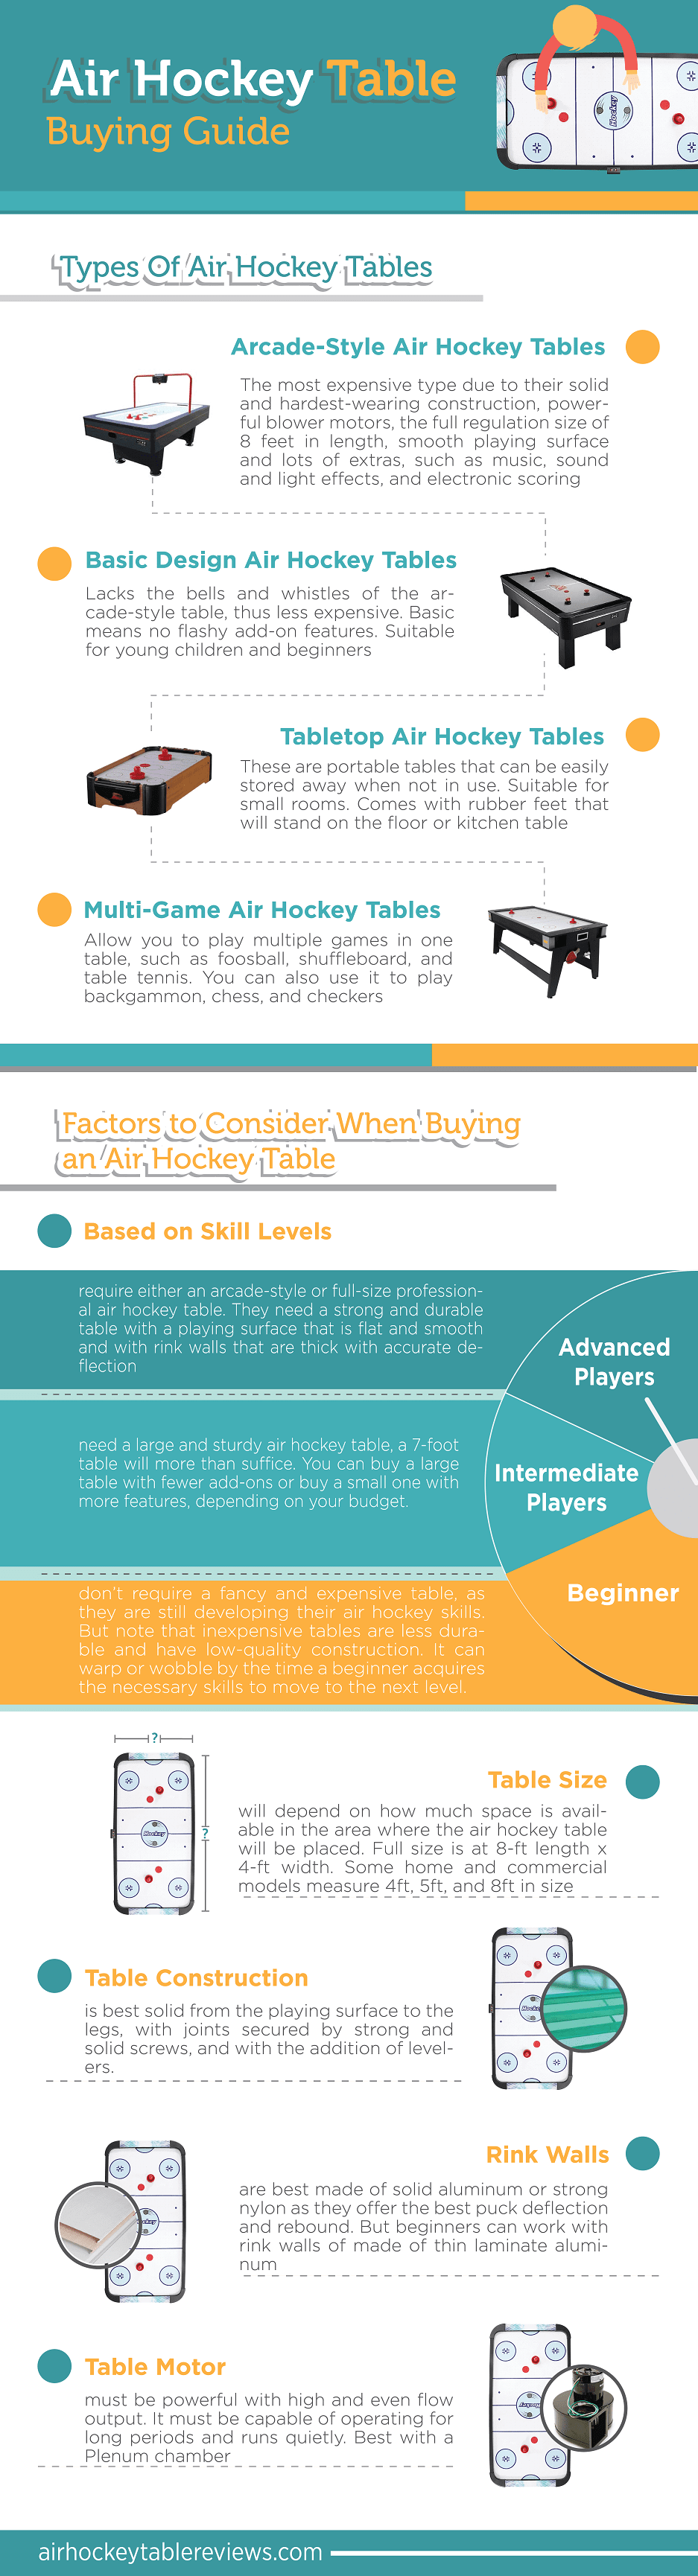 Air hockey buyers